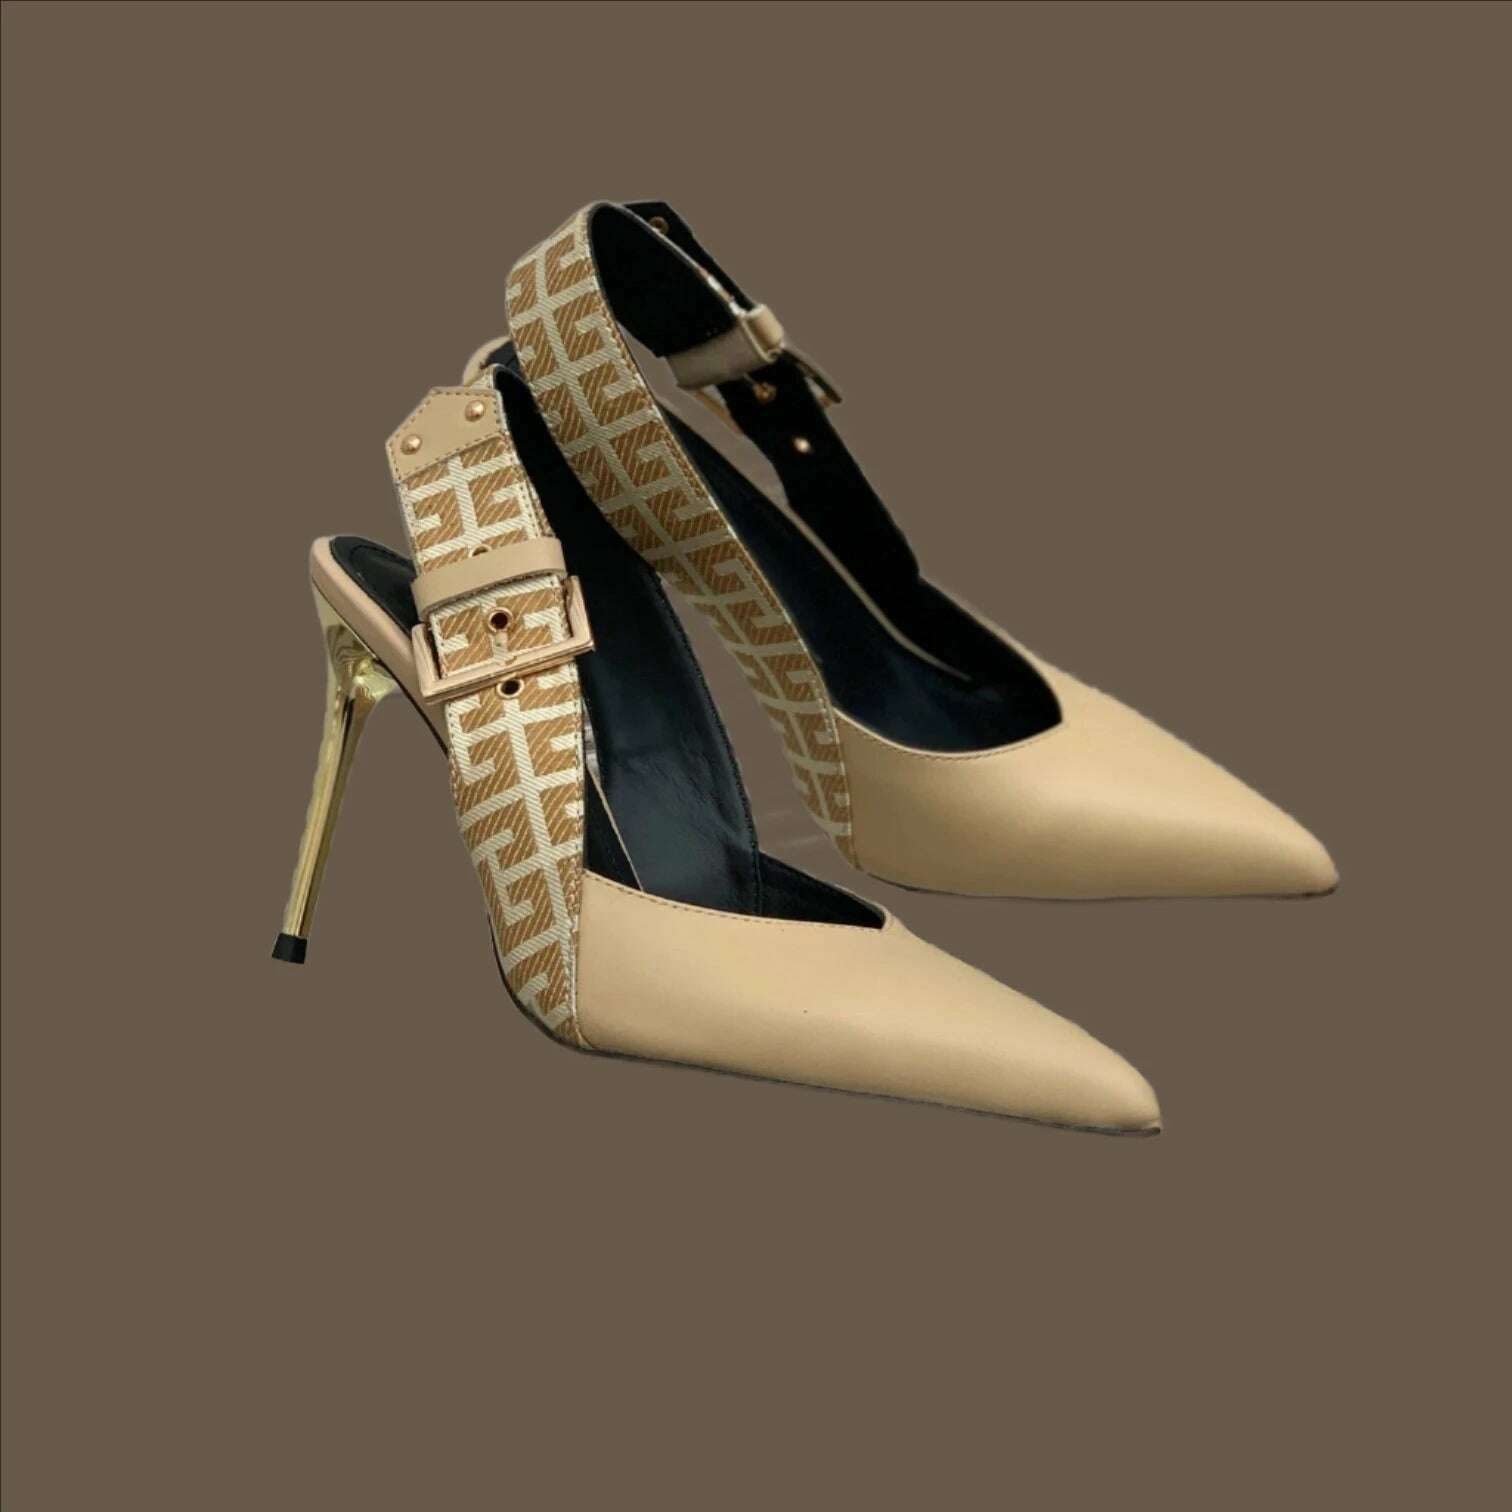 KIMLUD, Spring Autumn Women Women Pumps Fashion Genuine Leather Summer Sandals Super High Heels Print Pumps Slingbacks Party Dress Shoes, as show 4 / 42, KIMLUD Women's Clothes